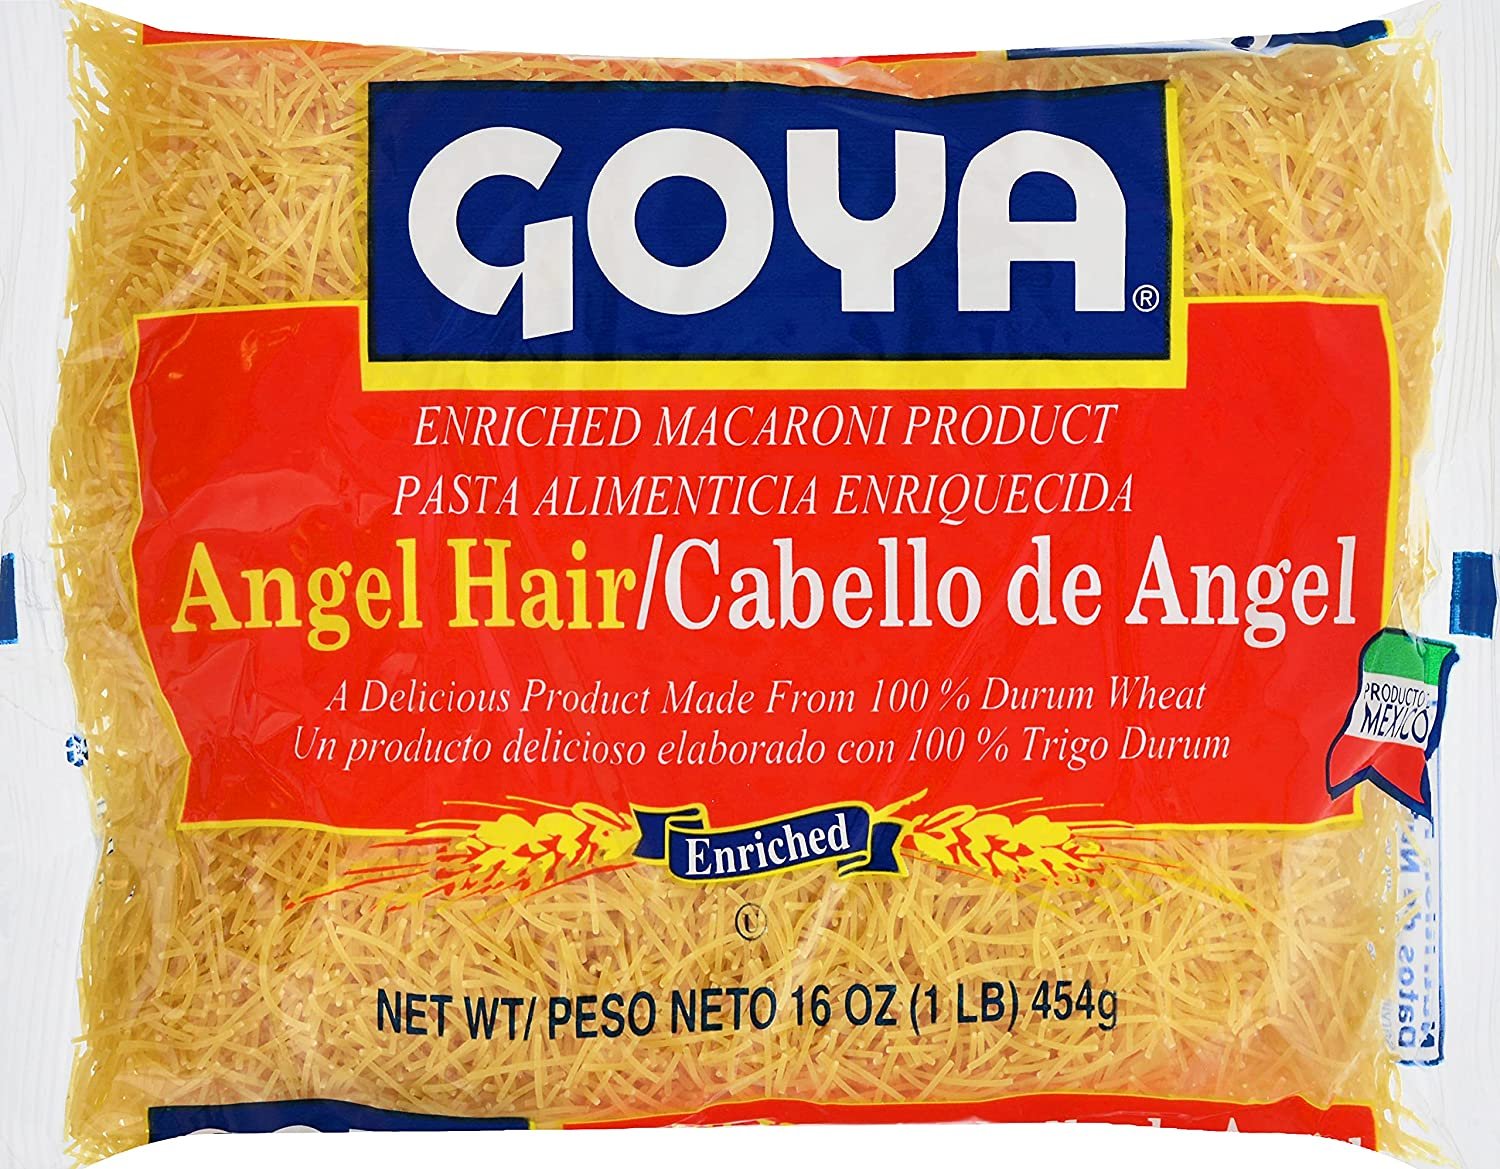 Papel para Pasteles - Goya - 16 oz